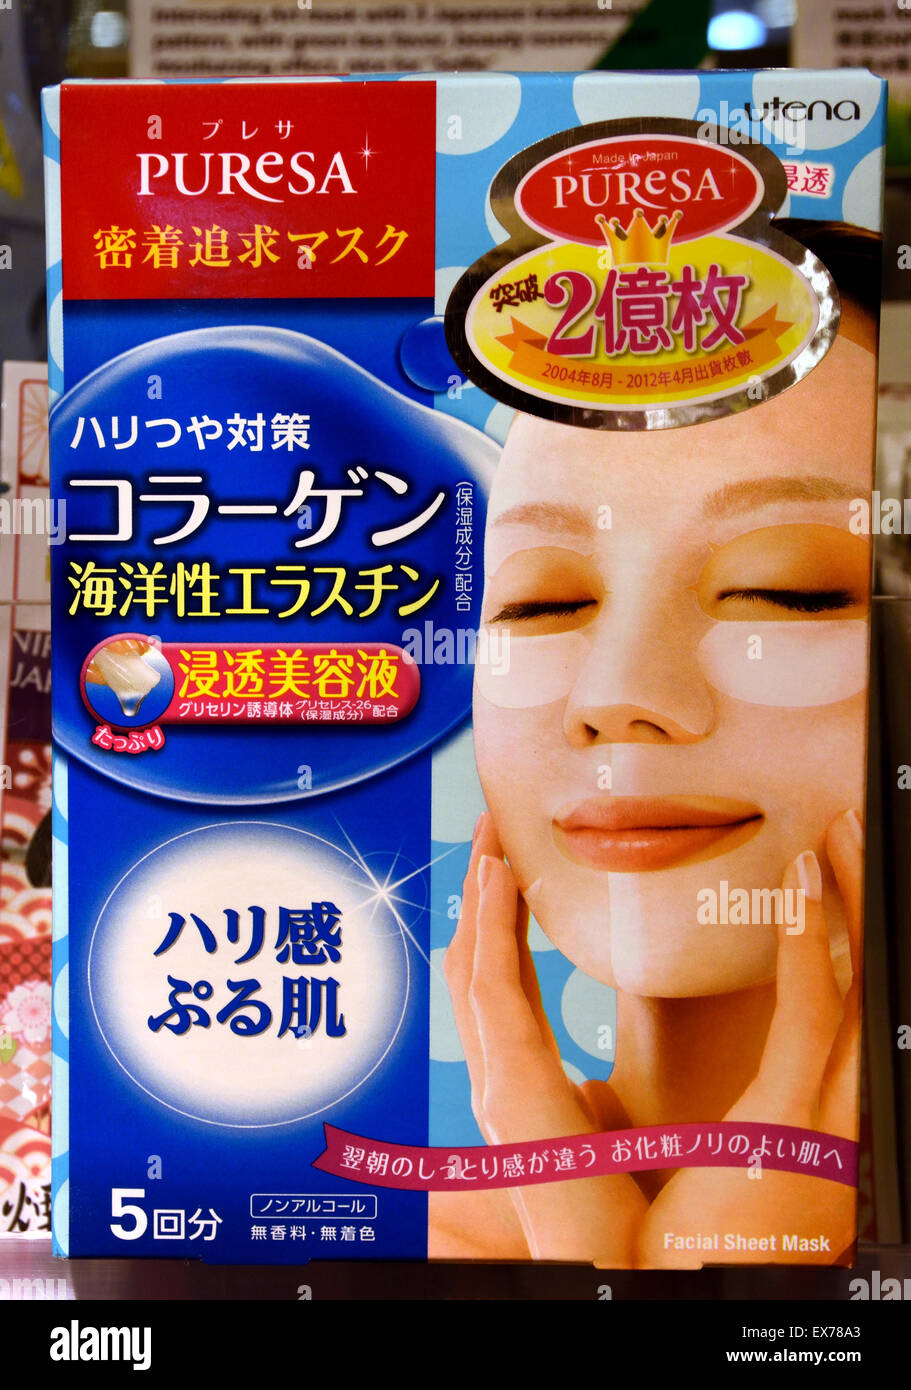 Maske Gesicht weibliche Care Beauty Produkte Hong Kong chinesische China  Werbung Stockfotografie - Alamy